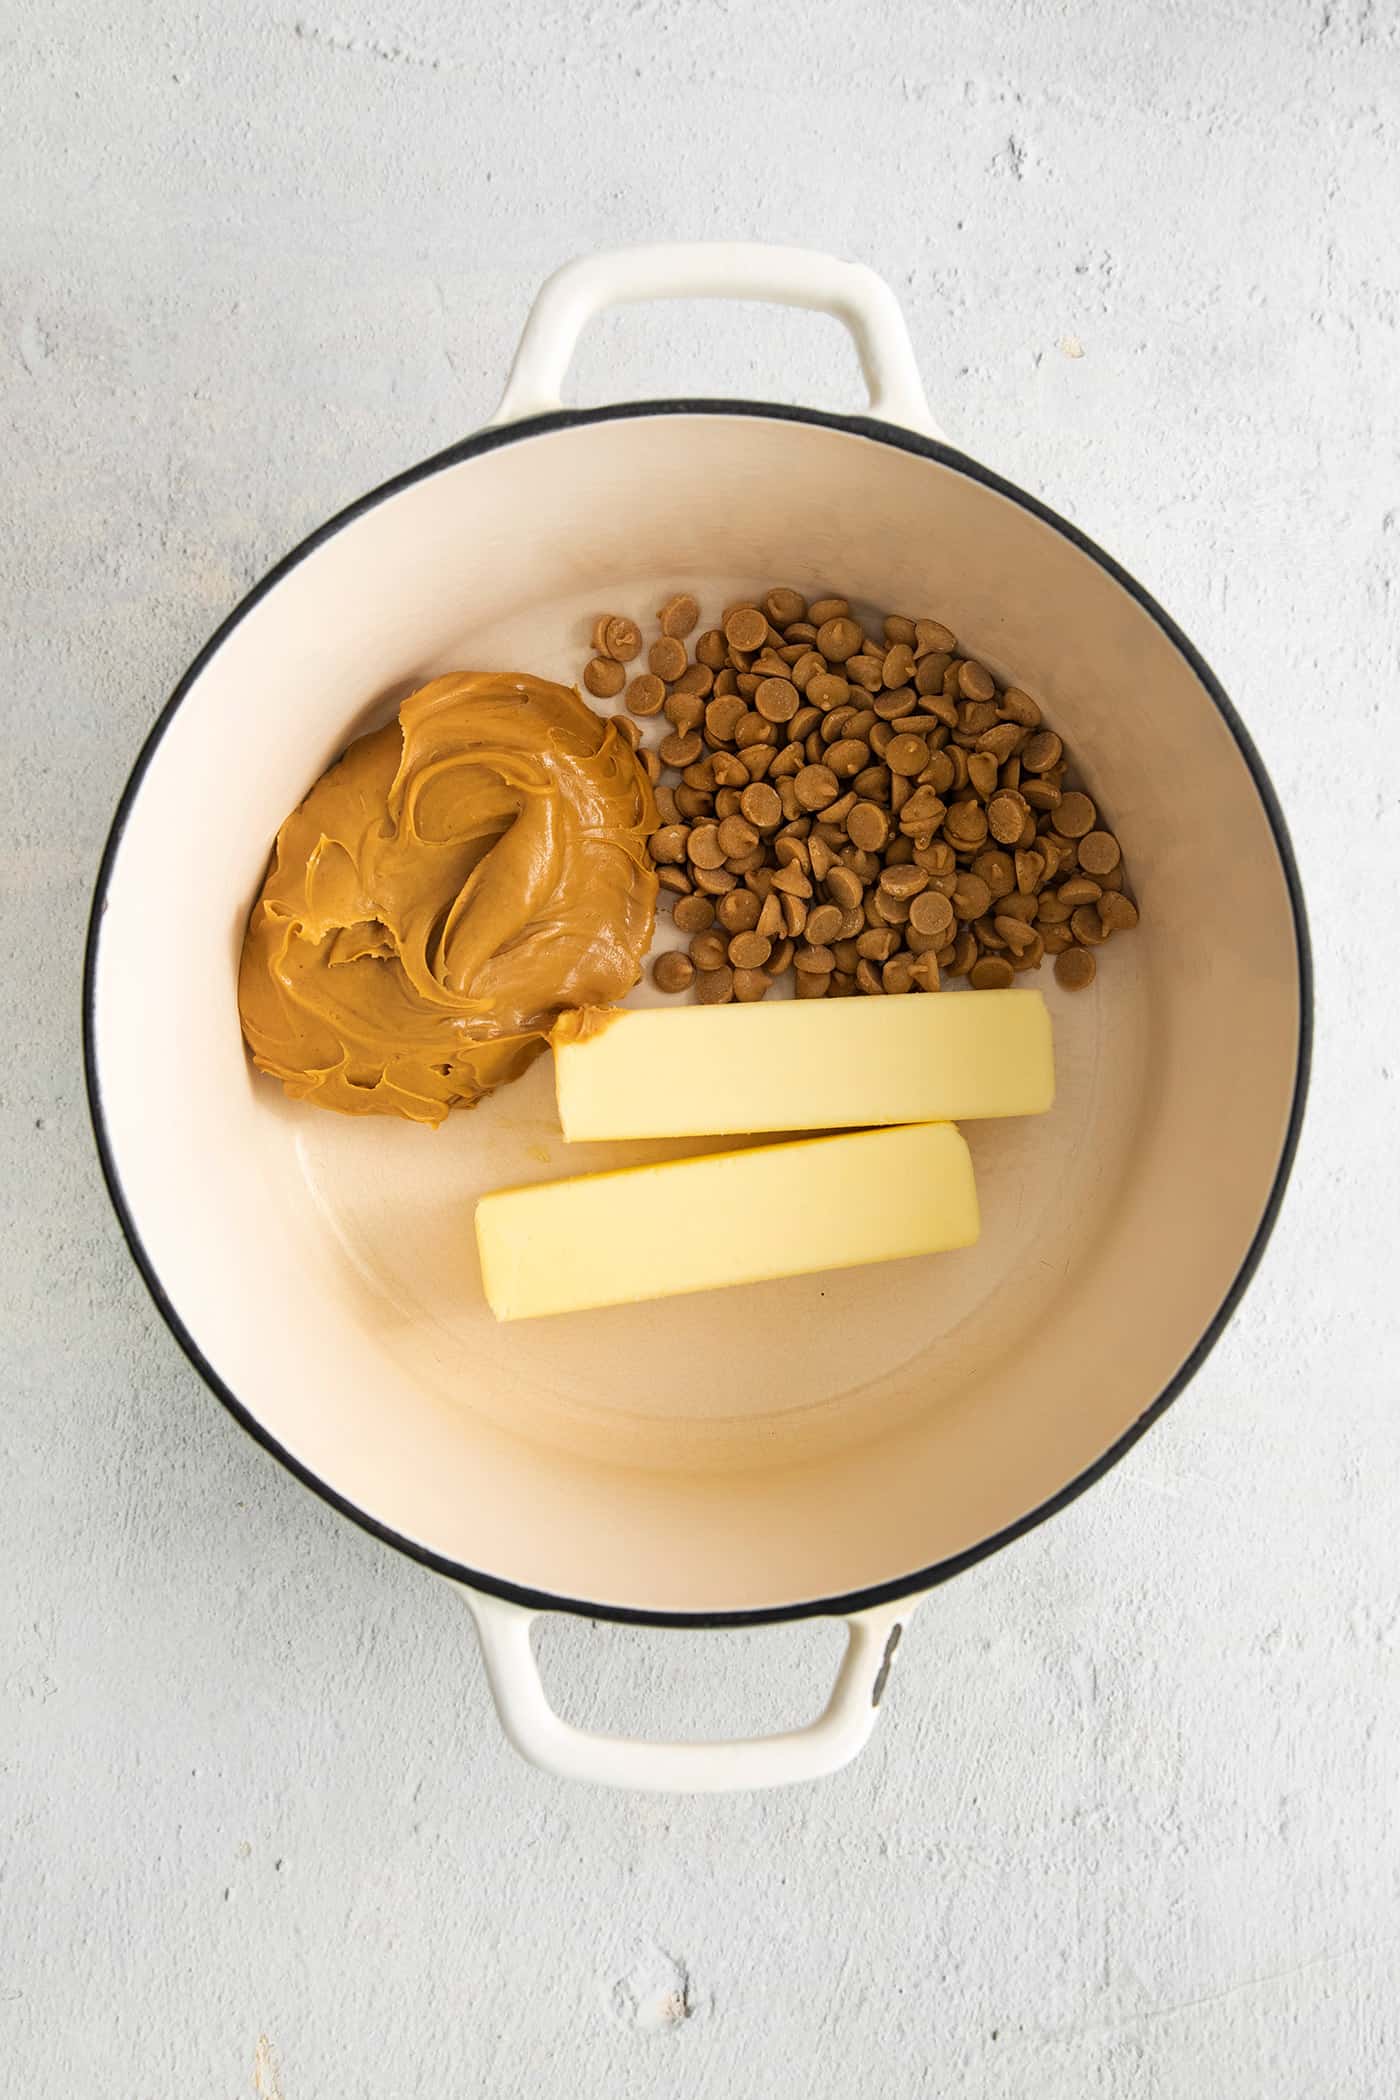 Peanut butter, butter, and peanut butter chips in a saucepan